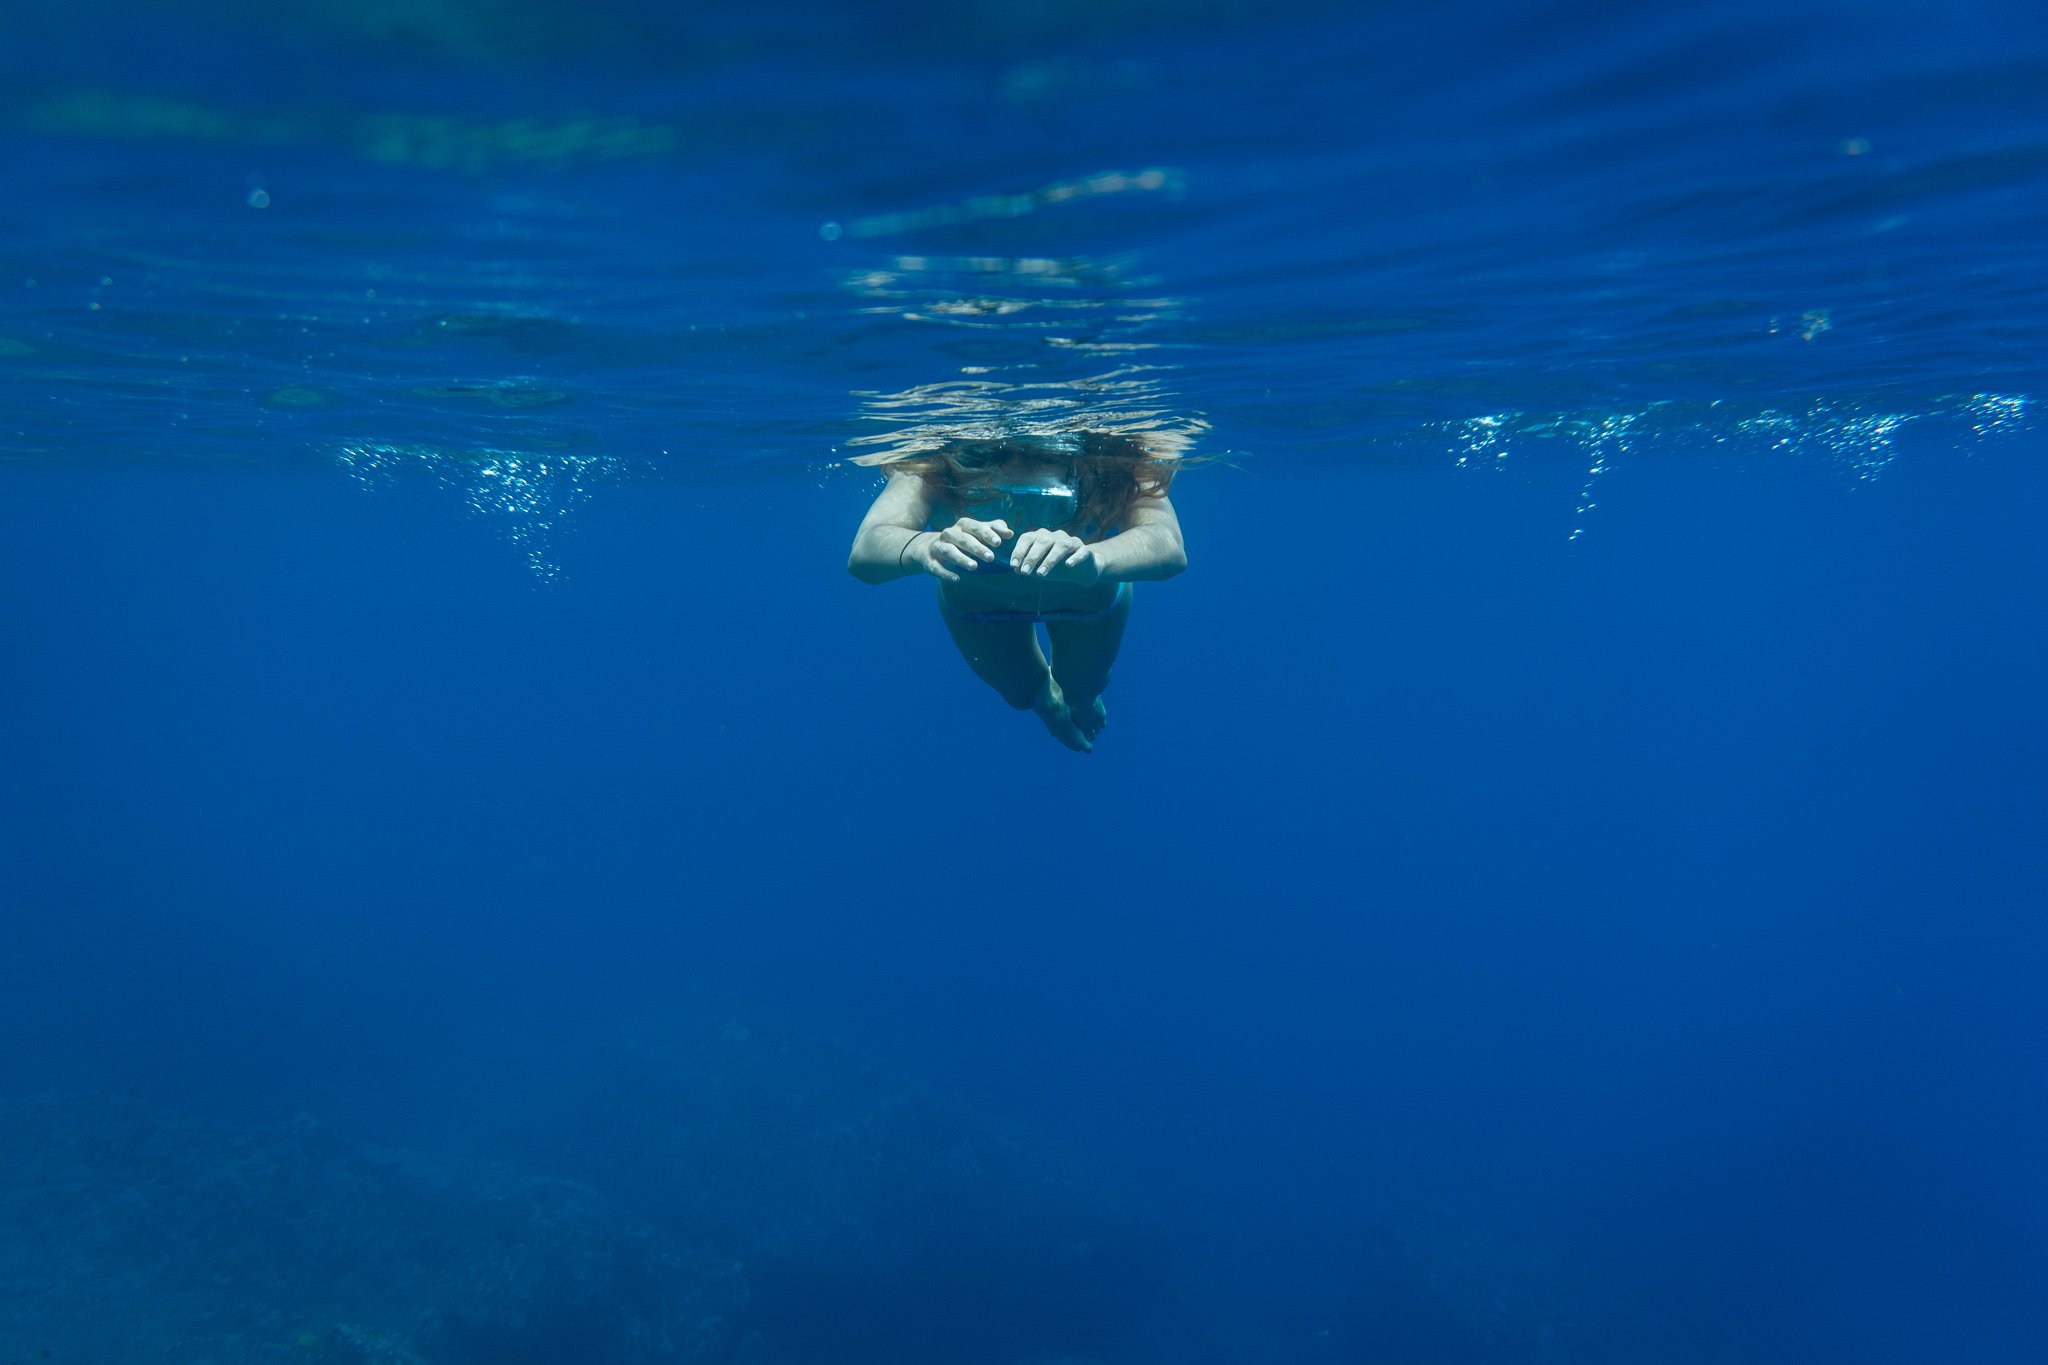 Tegan floating in the deep blue